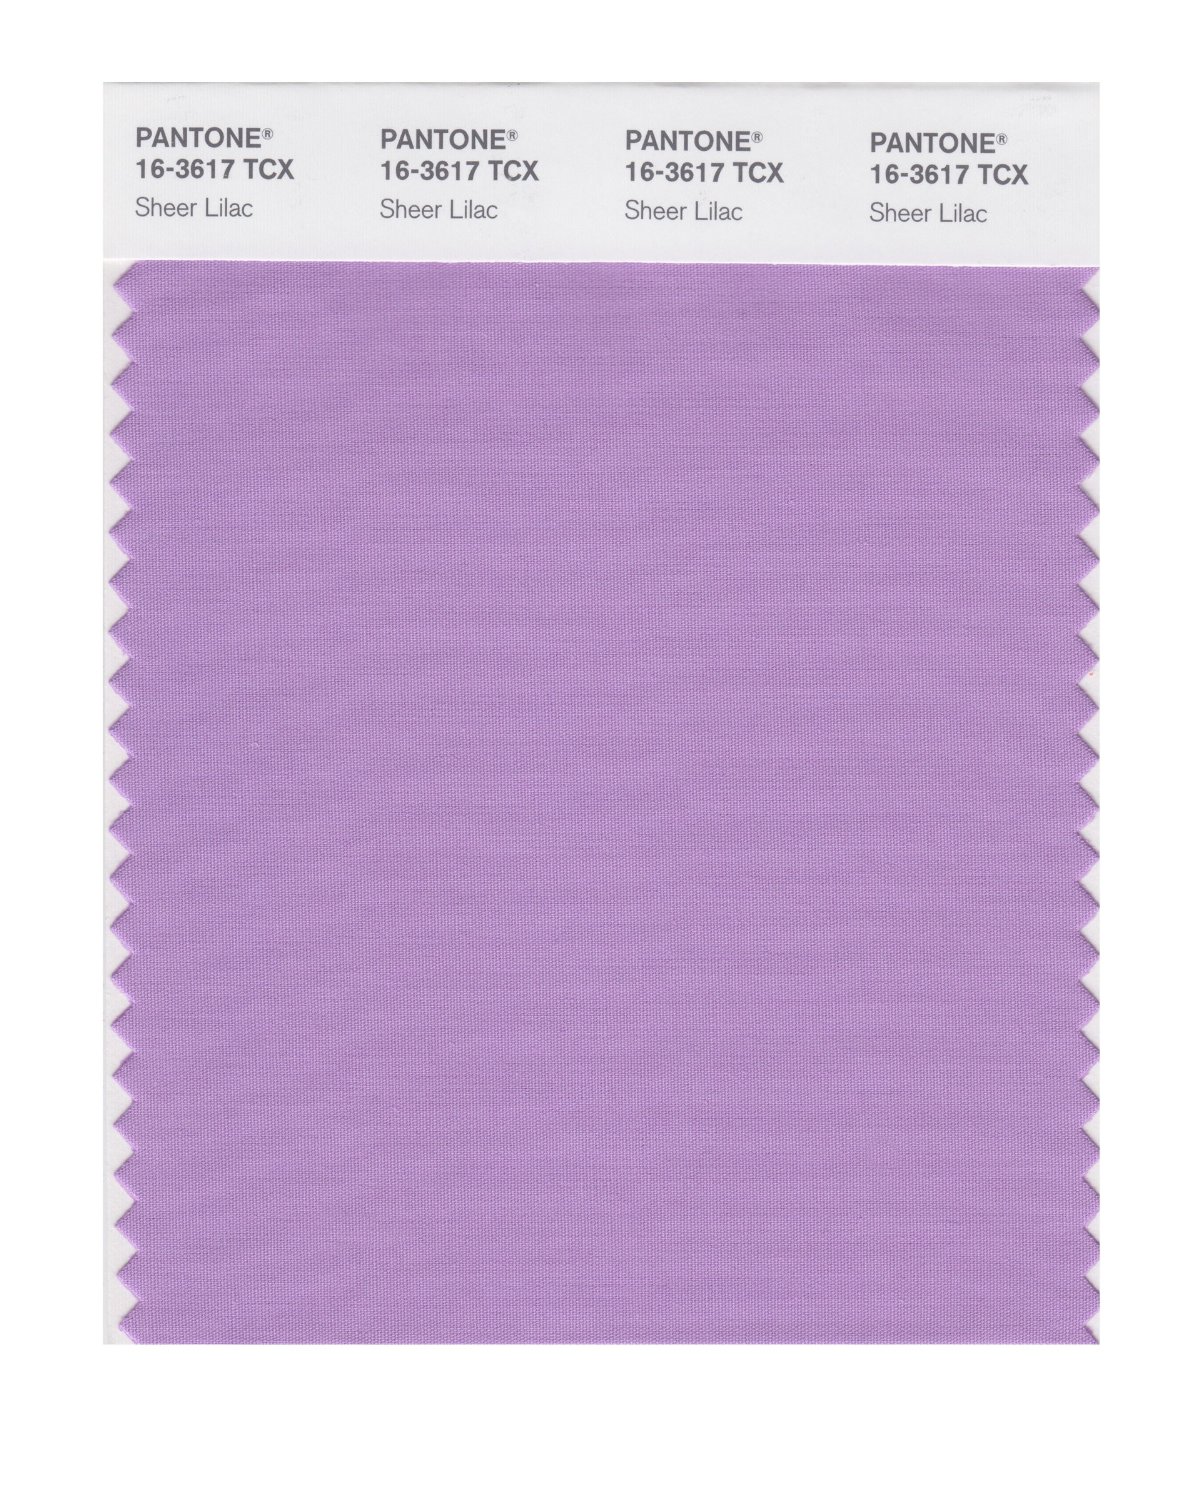 Pantone Cotton Swatch 16-3617 Sheer Lilac